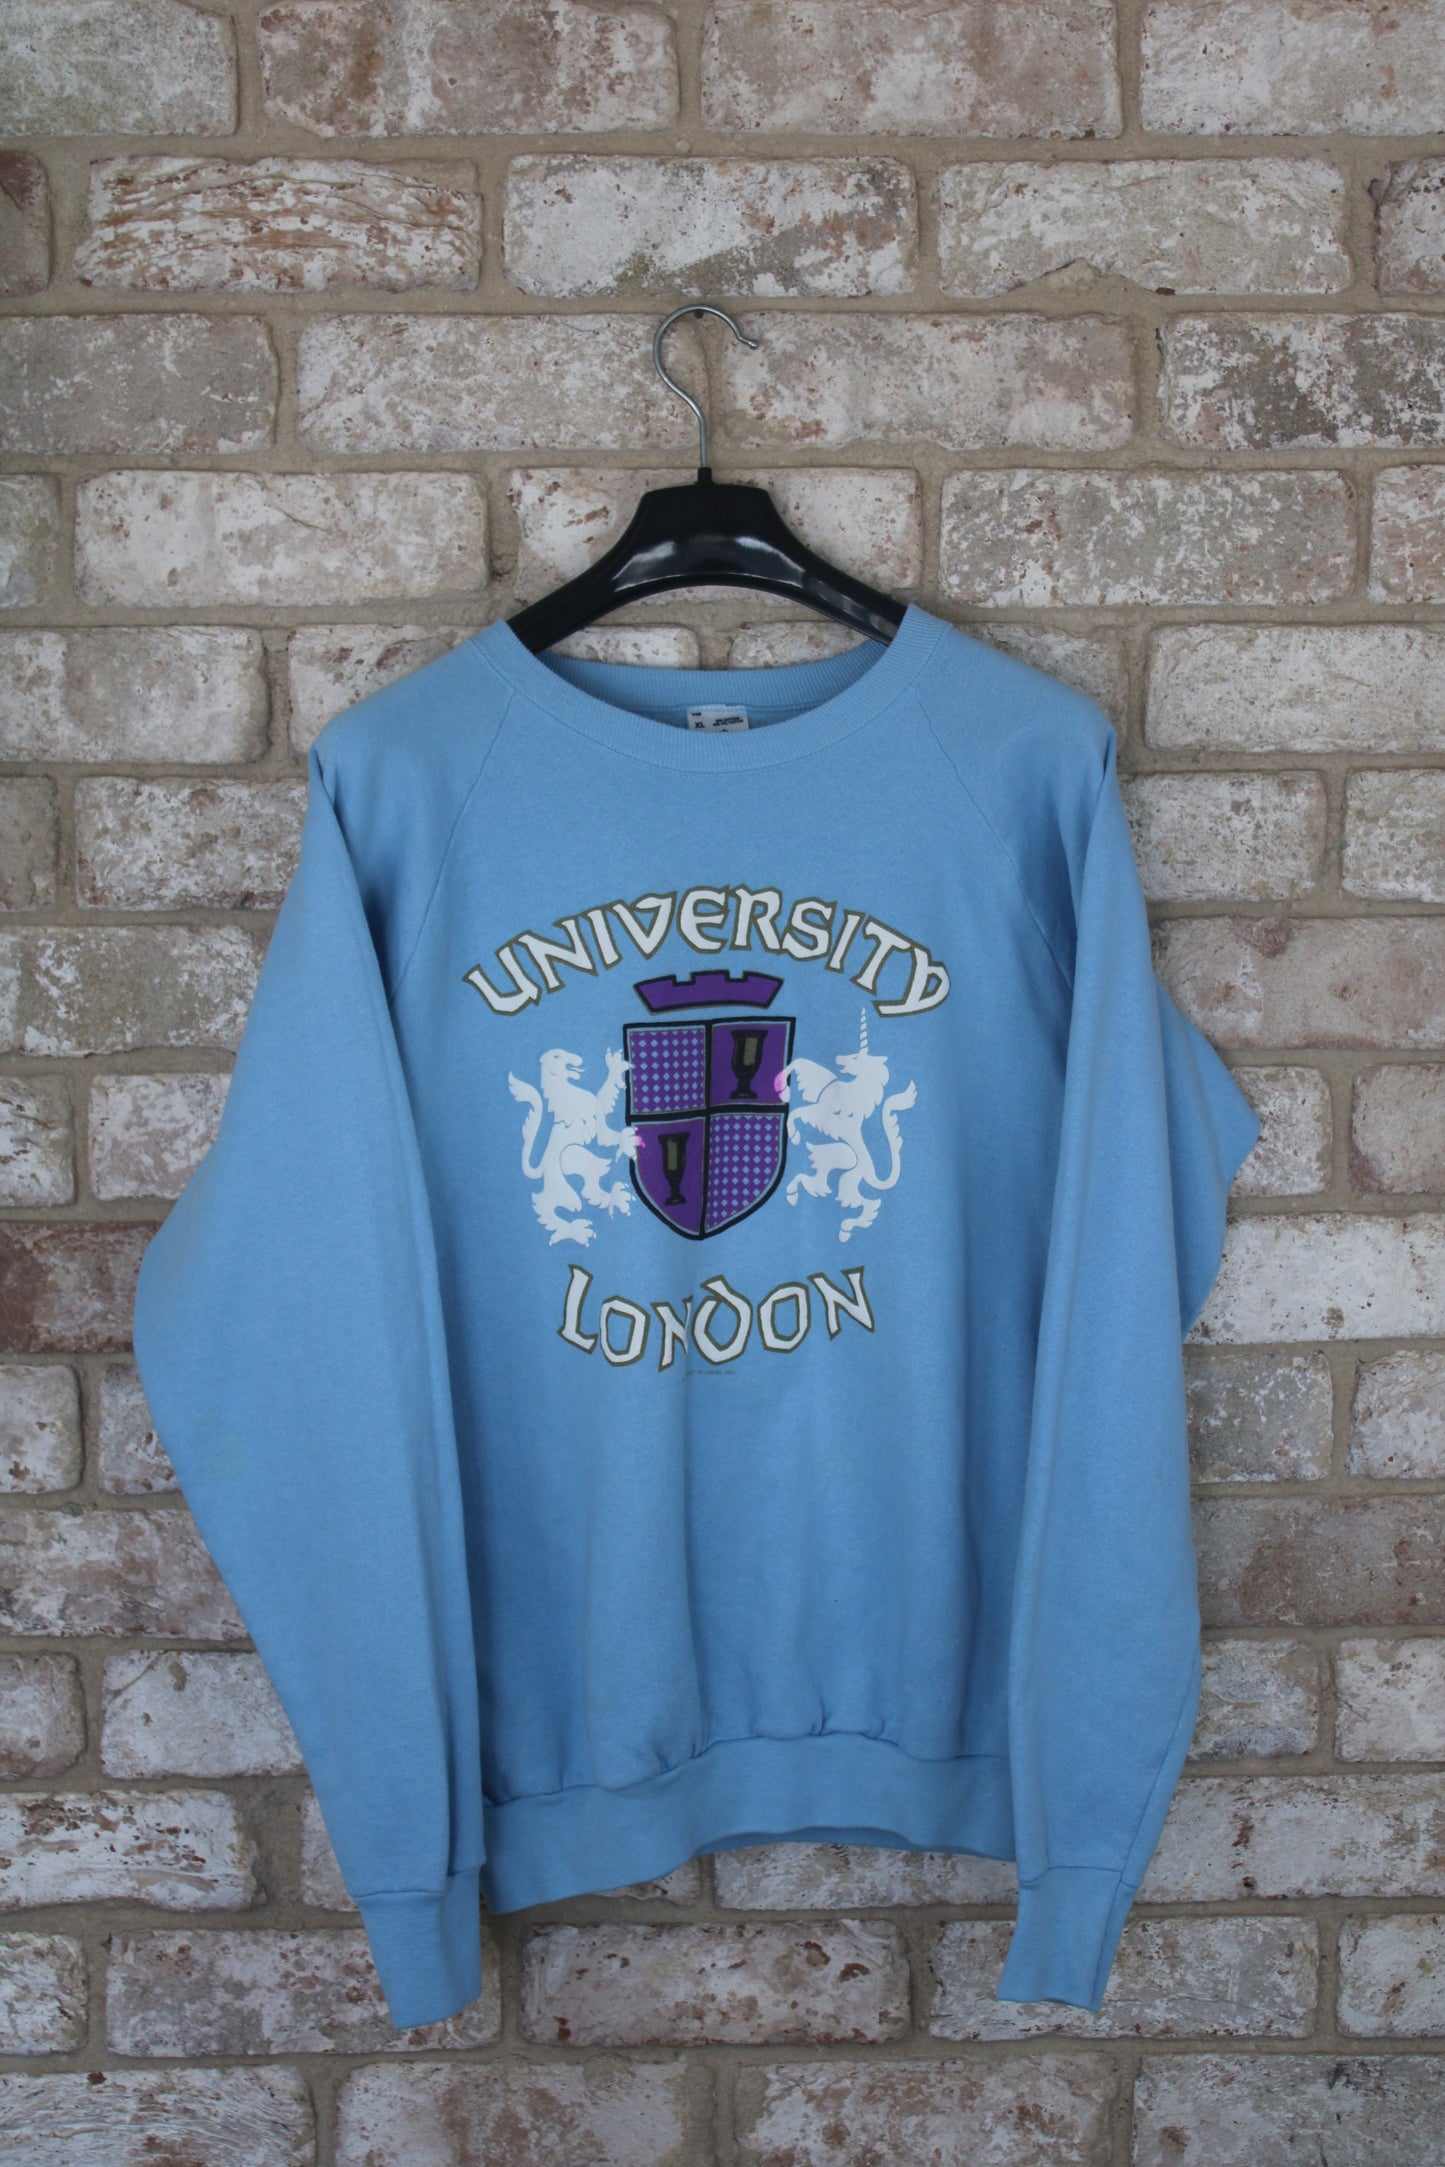 Vintage London University Sweatshirt XL